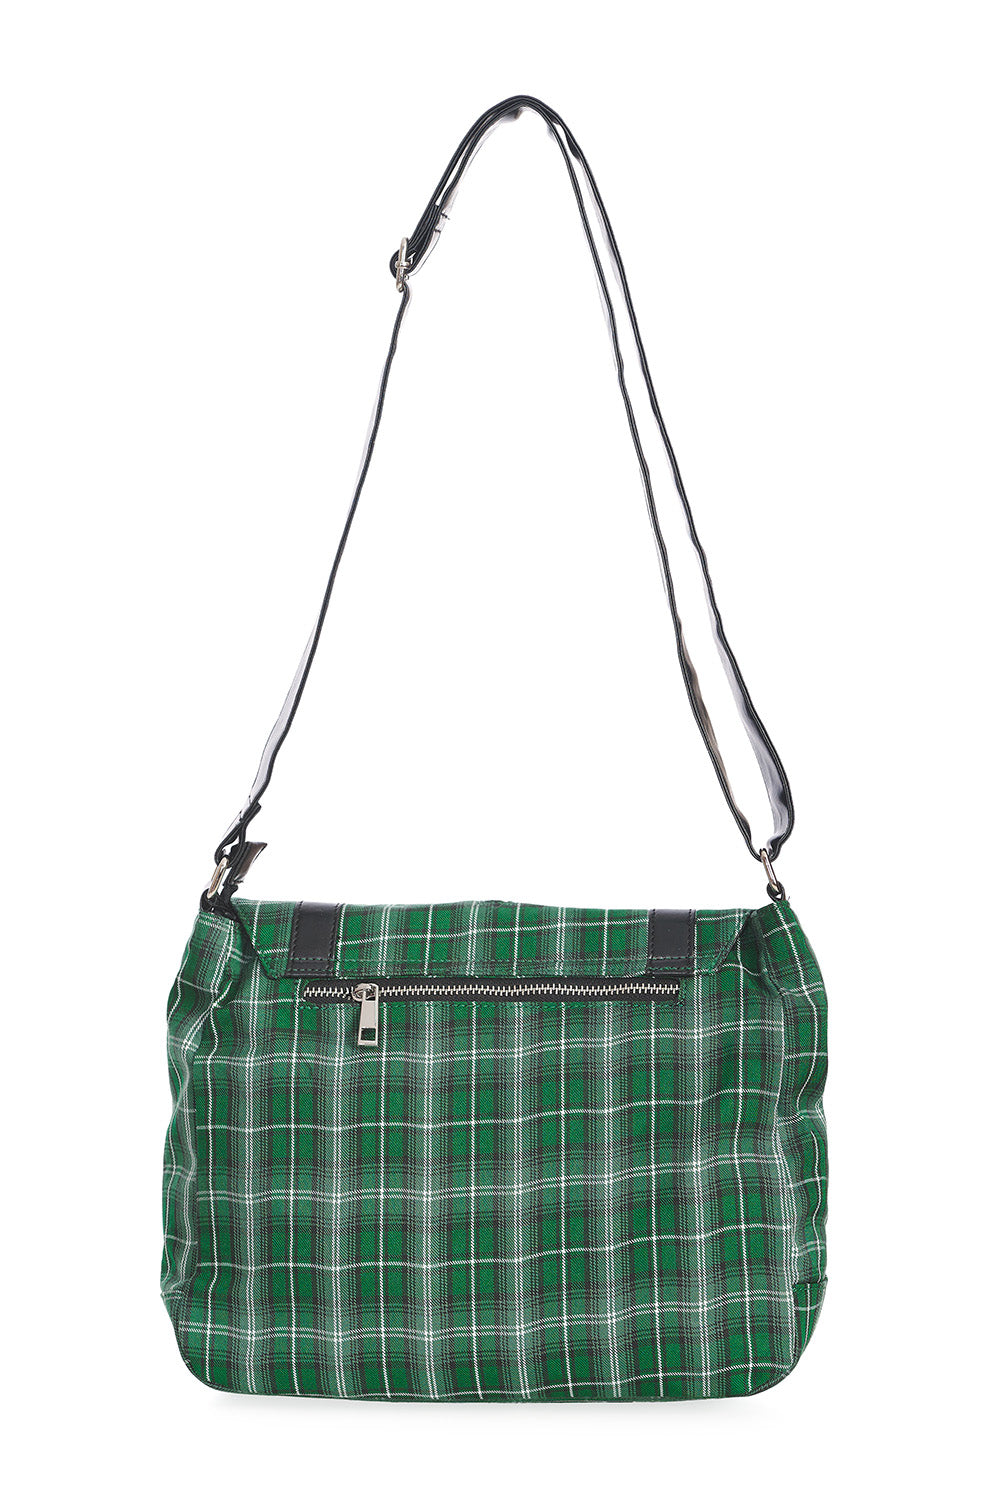 Punk Plaid Print Tartan Messenger Shoulder Bag Crossbody Handbag Women's Purse (Green)